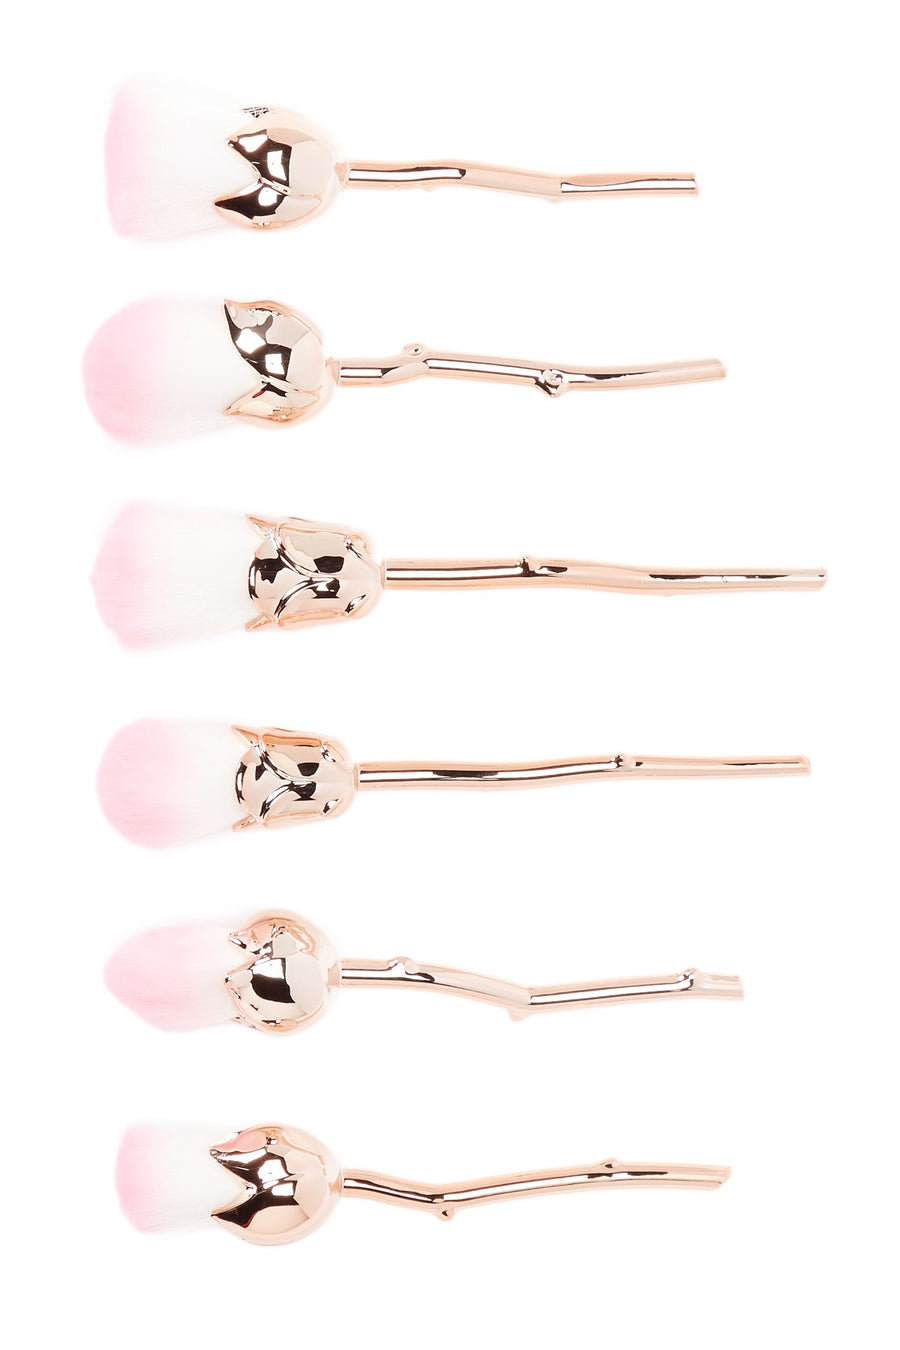 Rose Makeup 6-Piece Brush Set - White/Pink - Blend Mineral Cosmetics